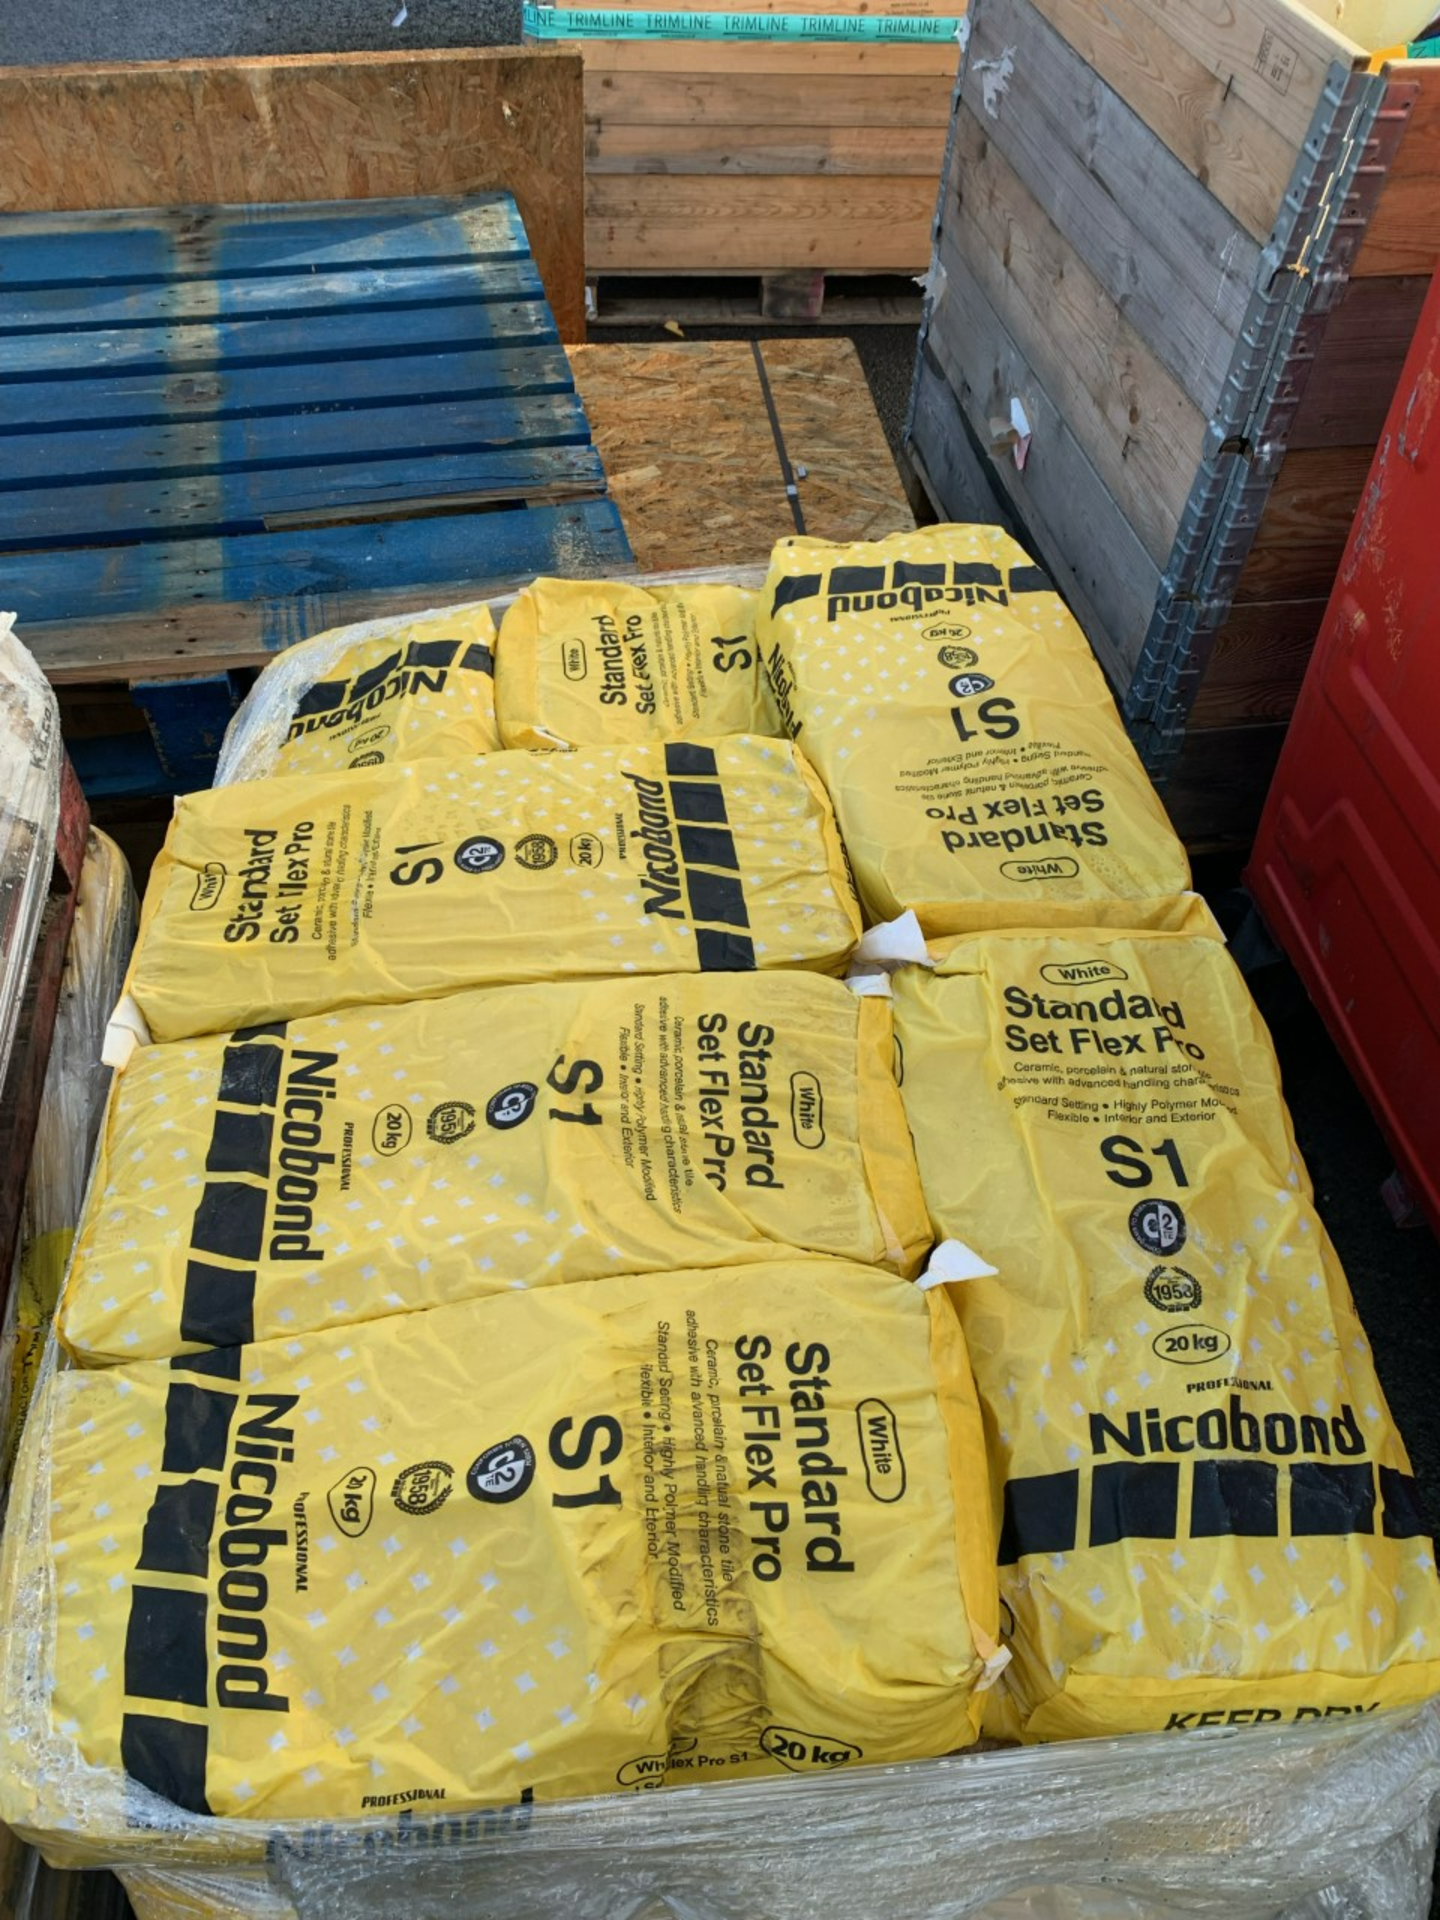 Nicobond Pro standard set flex tile adhesive - Full pallet of 20kg bags - Circa 42 bags